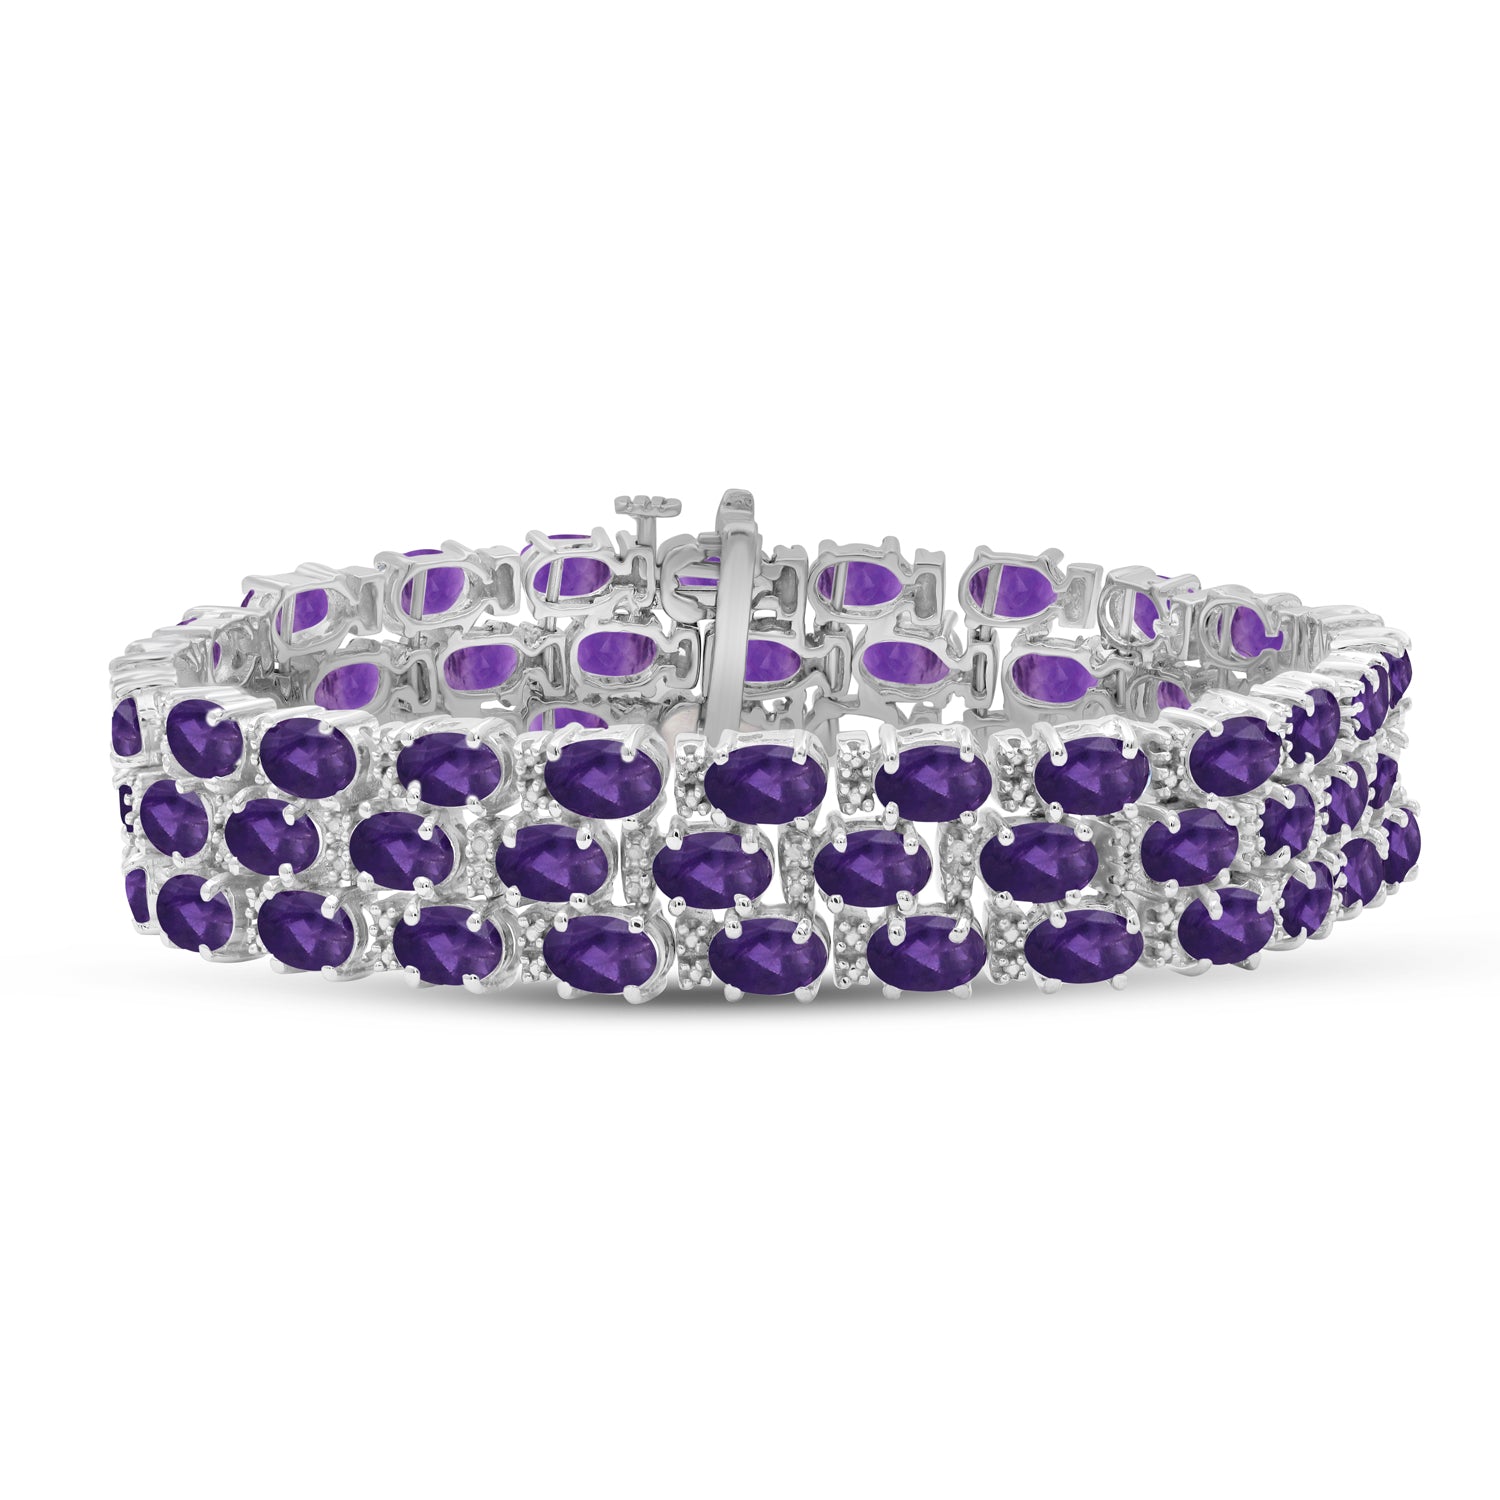 RUZZALLATI 16+3cm Silver Color Exquisite Dazzling Natural Amethyst Bracelet  Buckle Charm Tennis Bangle Bracelets for Women Gifts